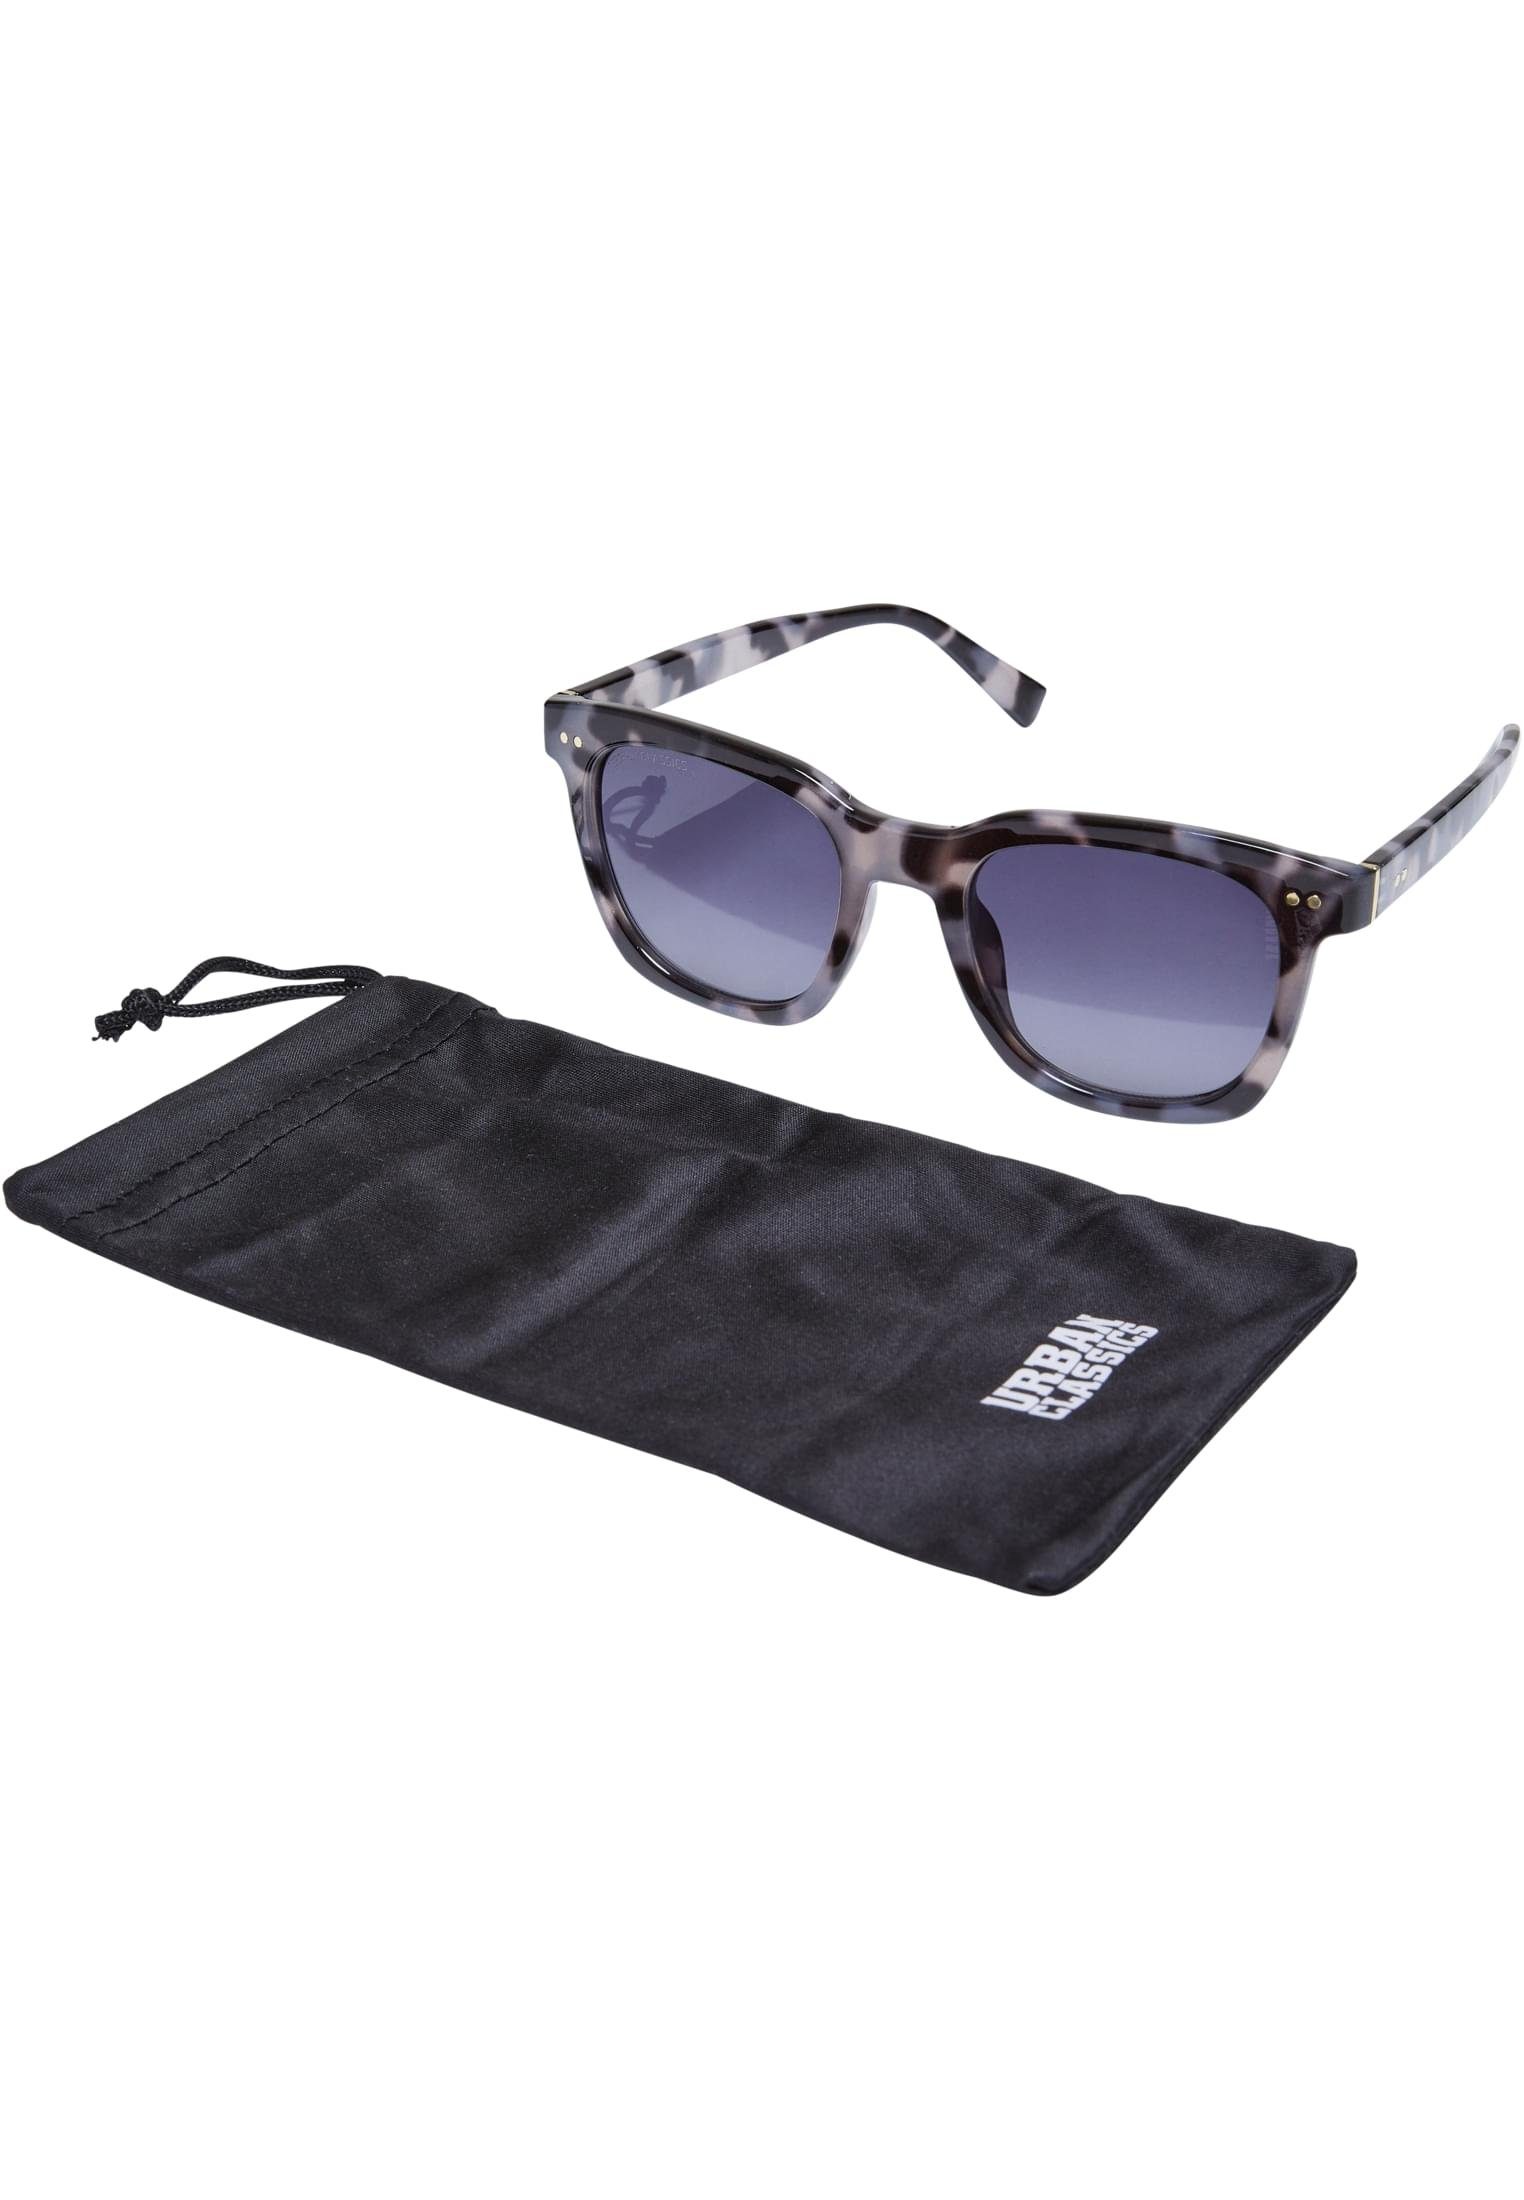 URBAN Sonnenbrille Naples Sunglasses Unisex CLASSICS amber/black